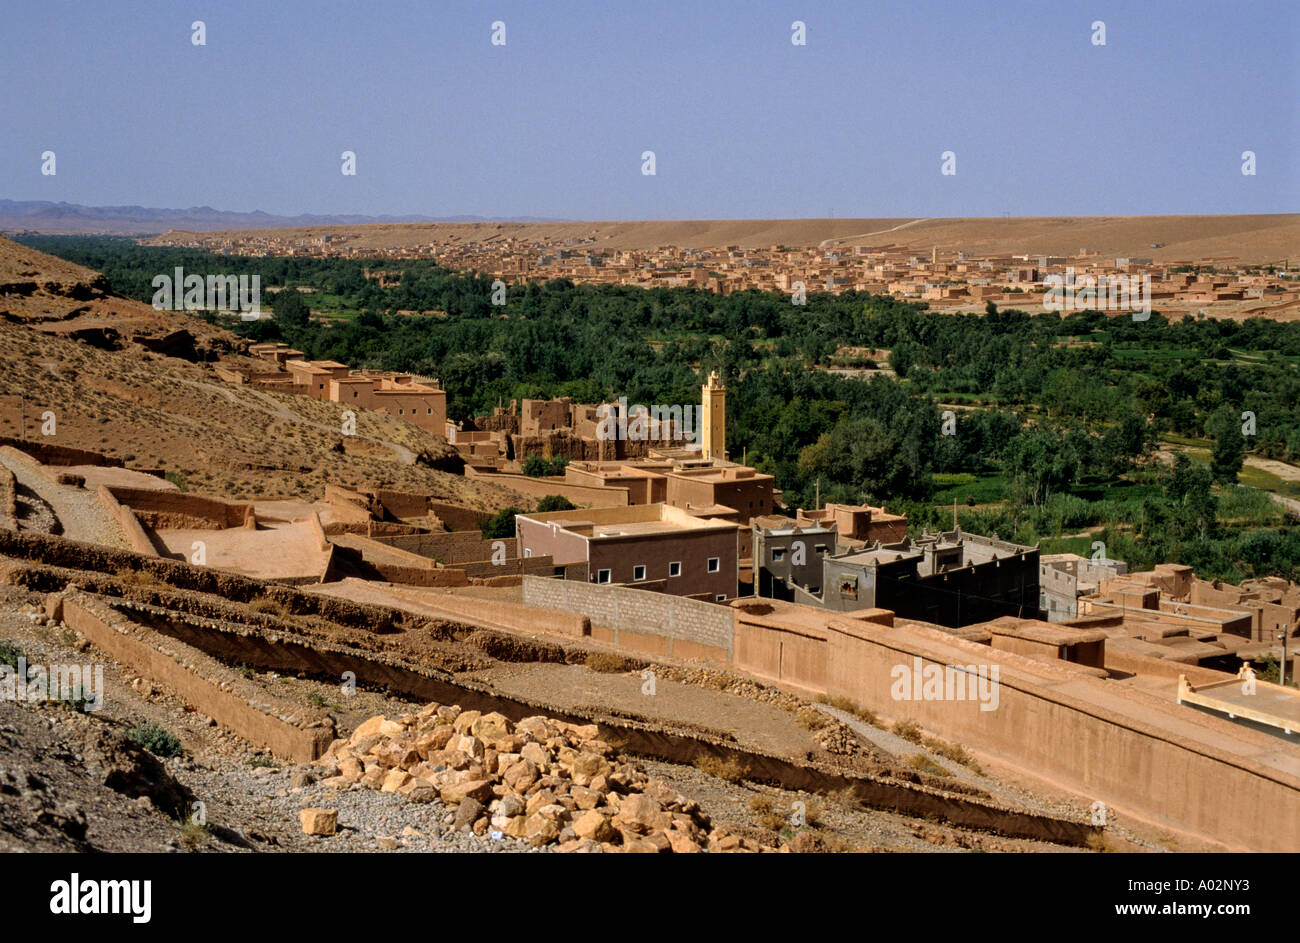 Boumalne Dades Stadt umgibt eine grüne Oase in Provinz von Ouarzazate, Marokko. Stockfoto